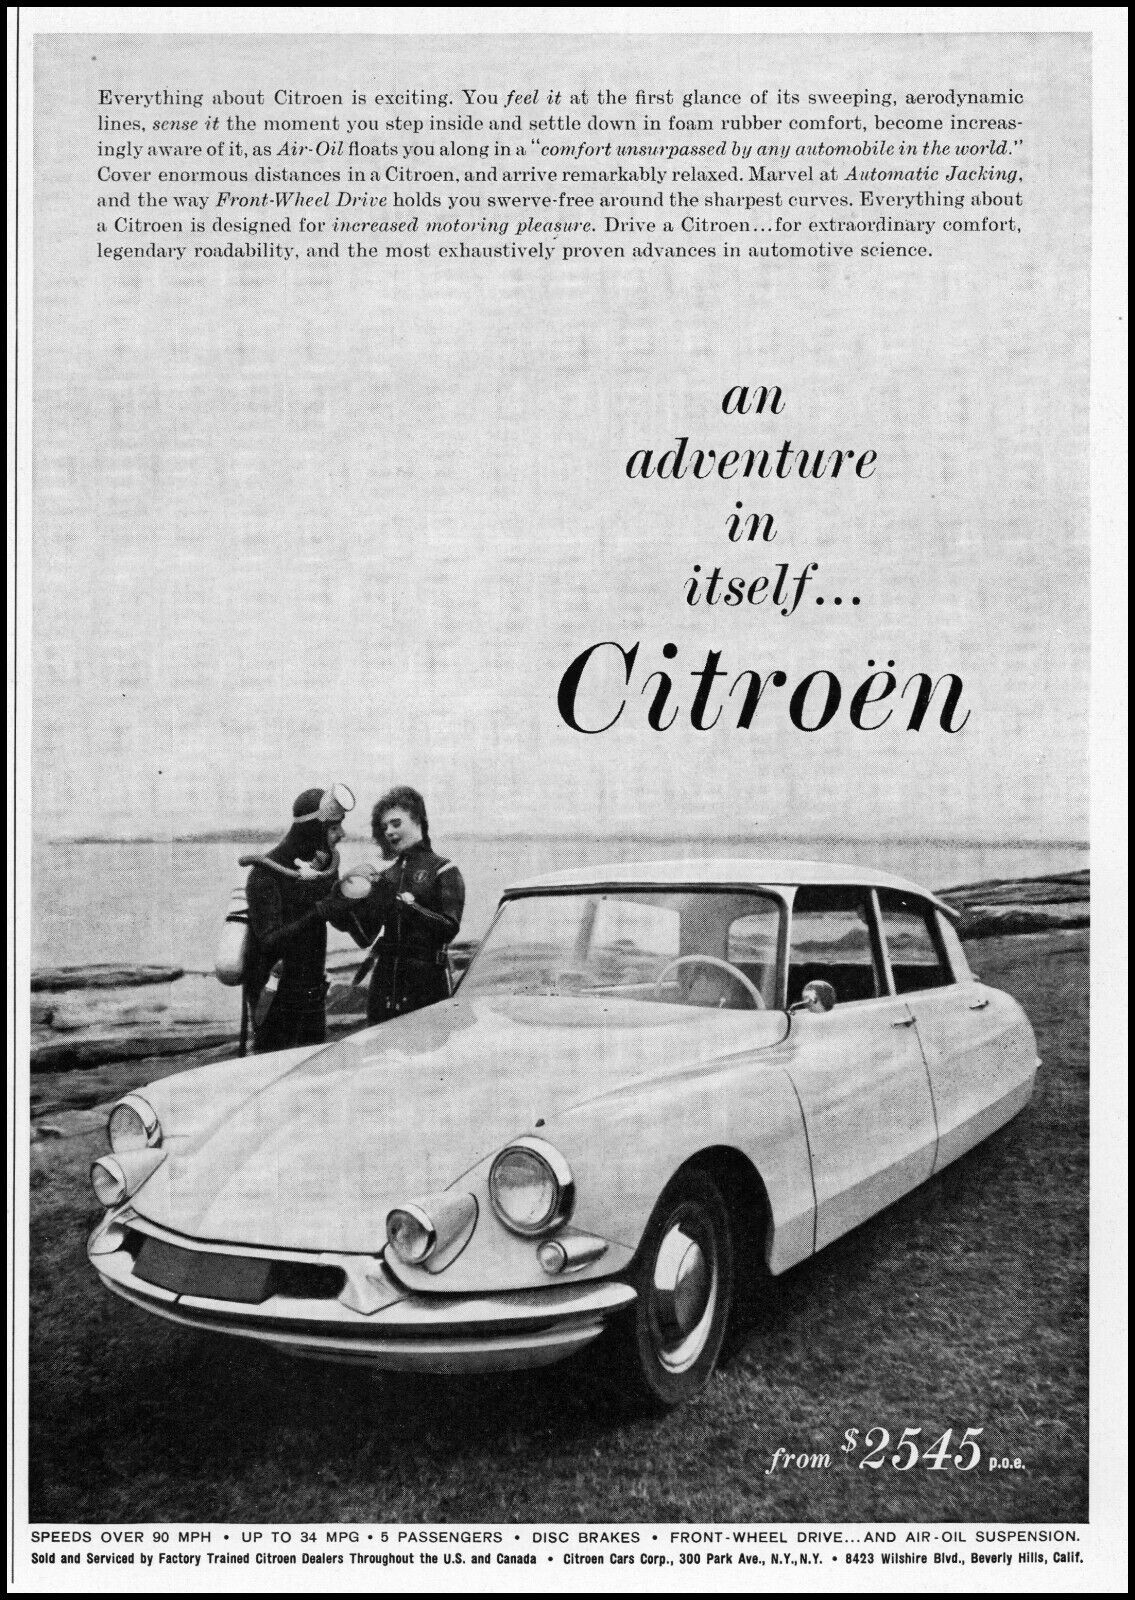 1960 Citroën DS car air-oil suspension scuba divers retro photo print ad LA37